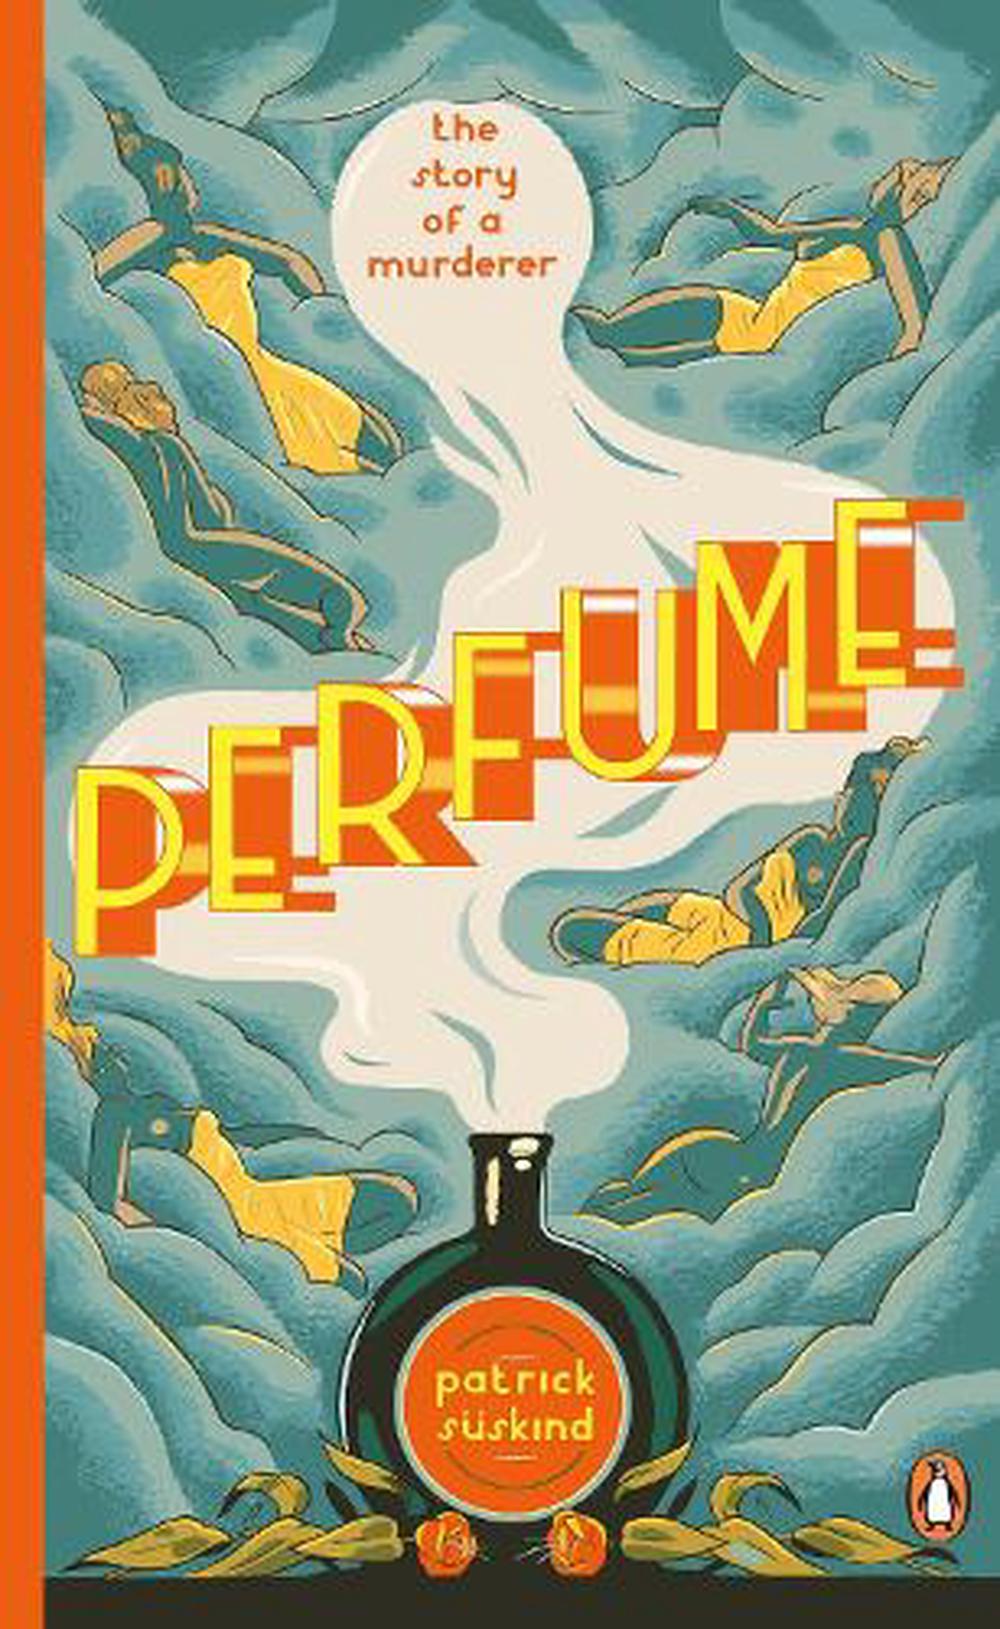 Perfume by Patrick Suskind, Paperback, 9780241973615 | Buy online at